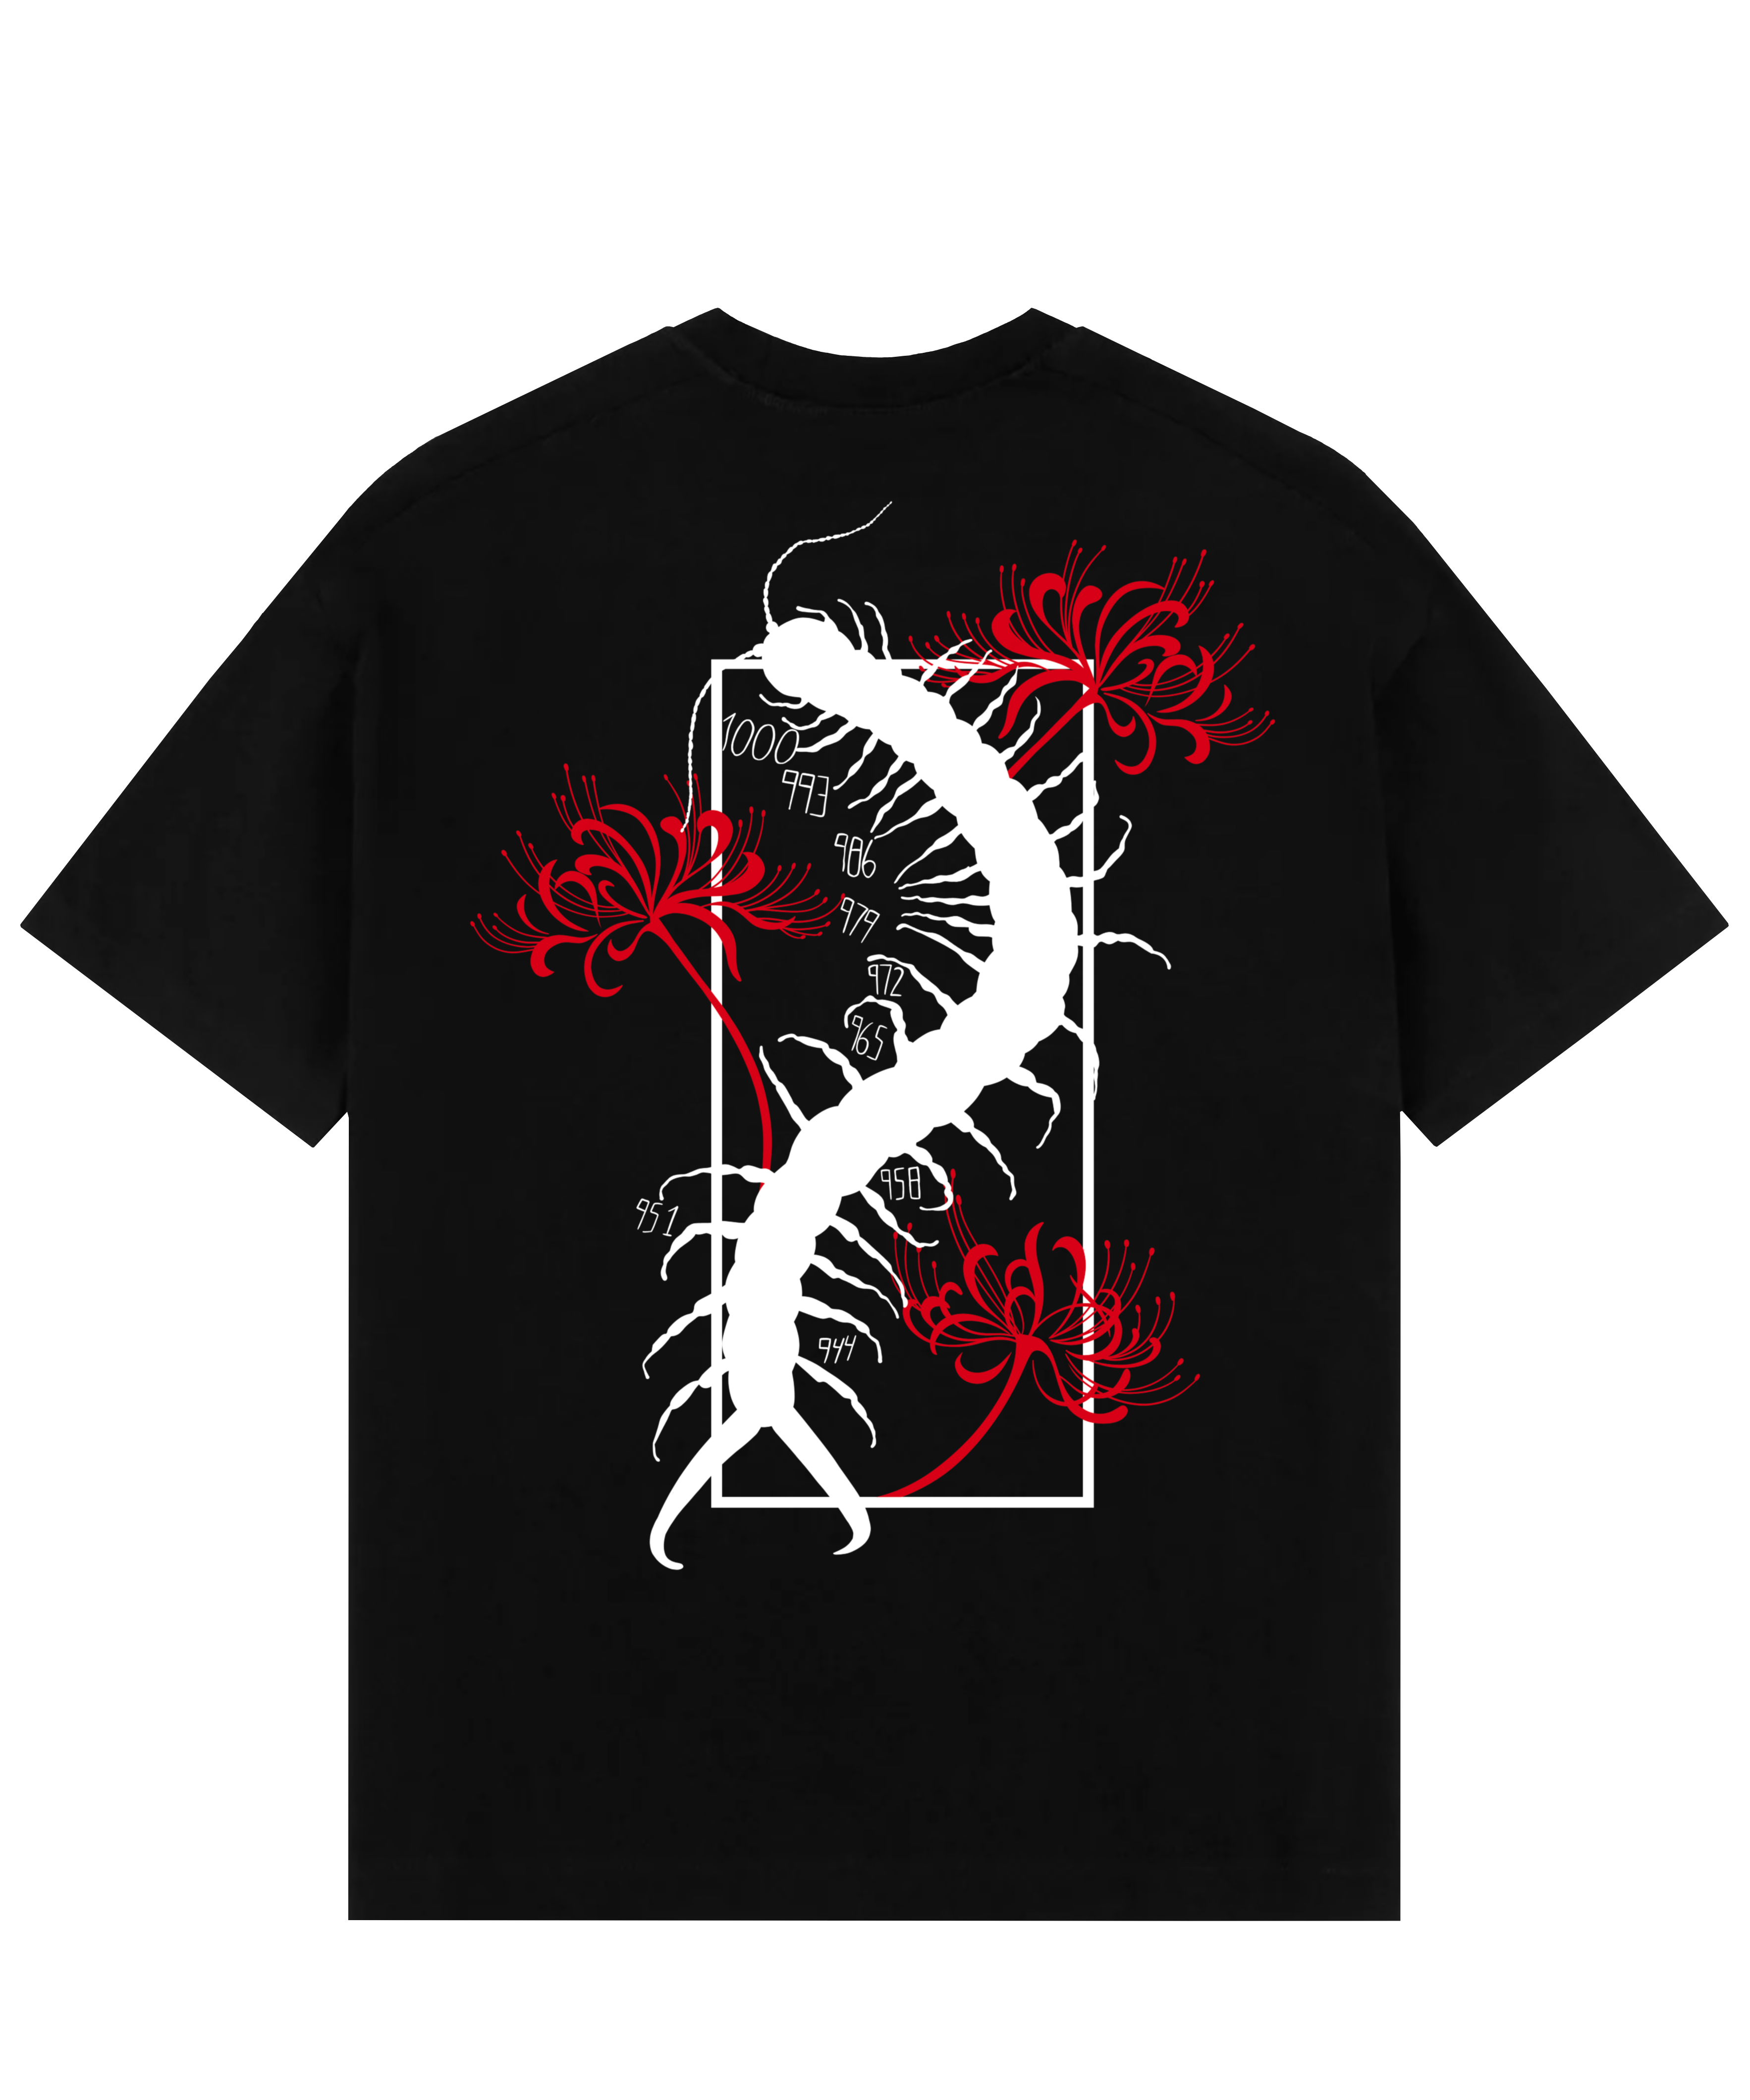 "Centipede - Tokyo Ghoul" T-shirt oversize